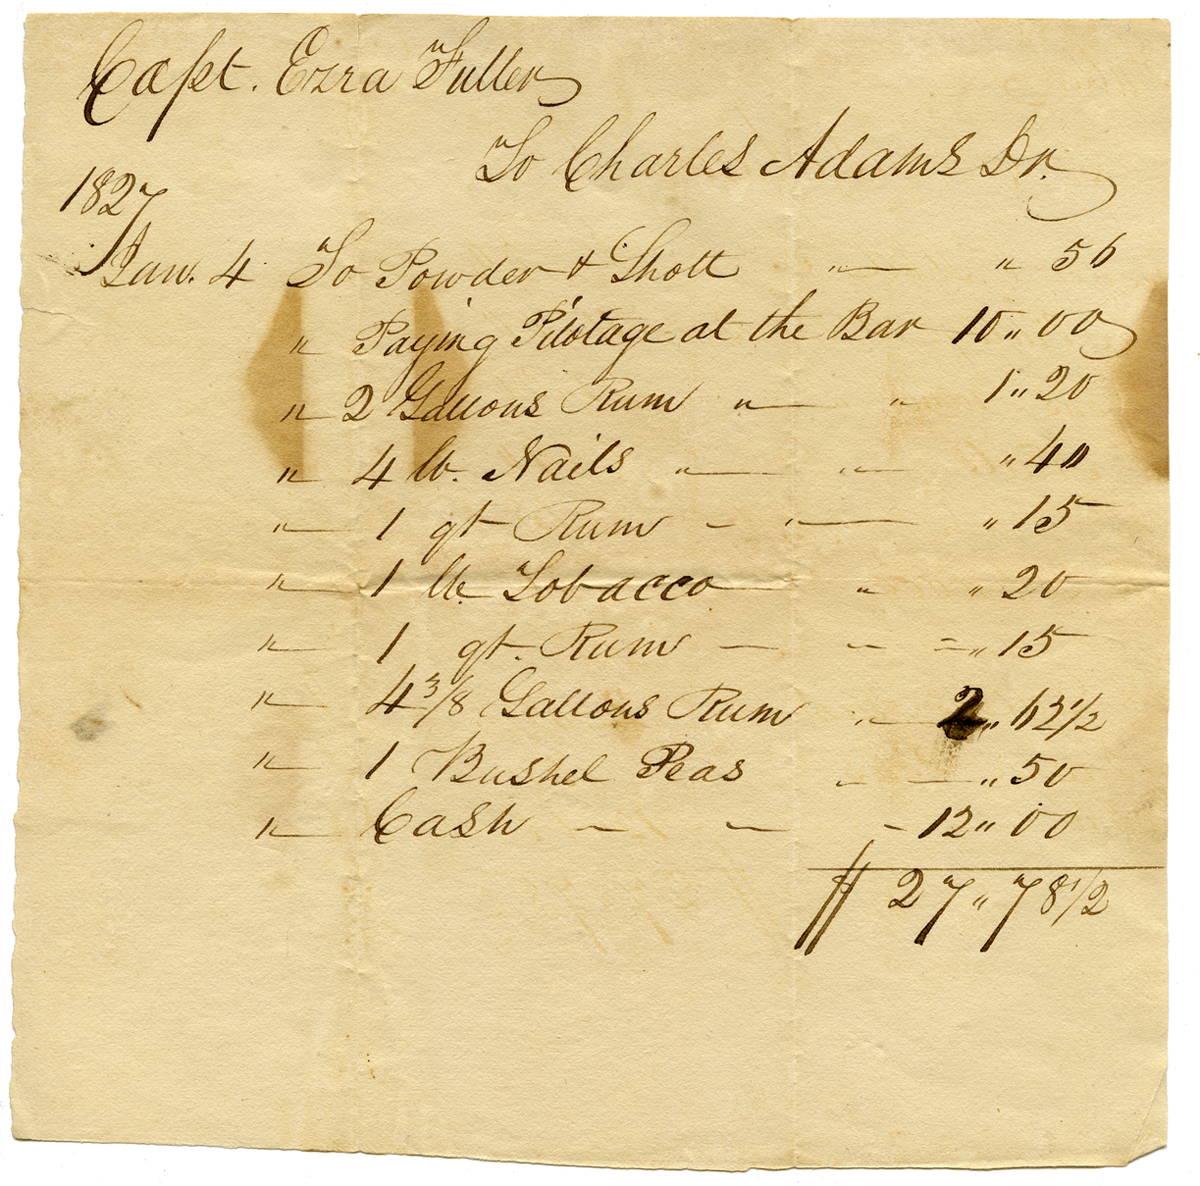 Capt. Ezra Fuller to Charles Adams, Jan. 4, 1827